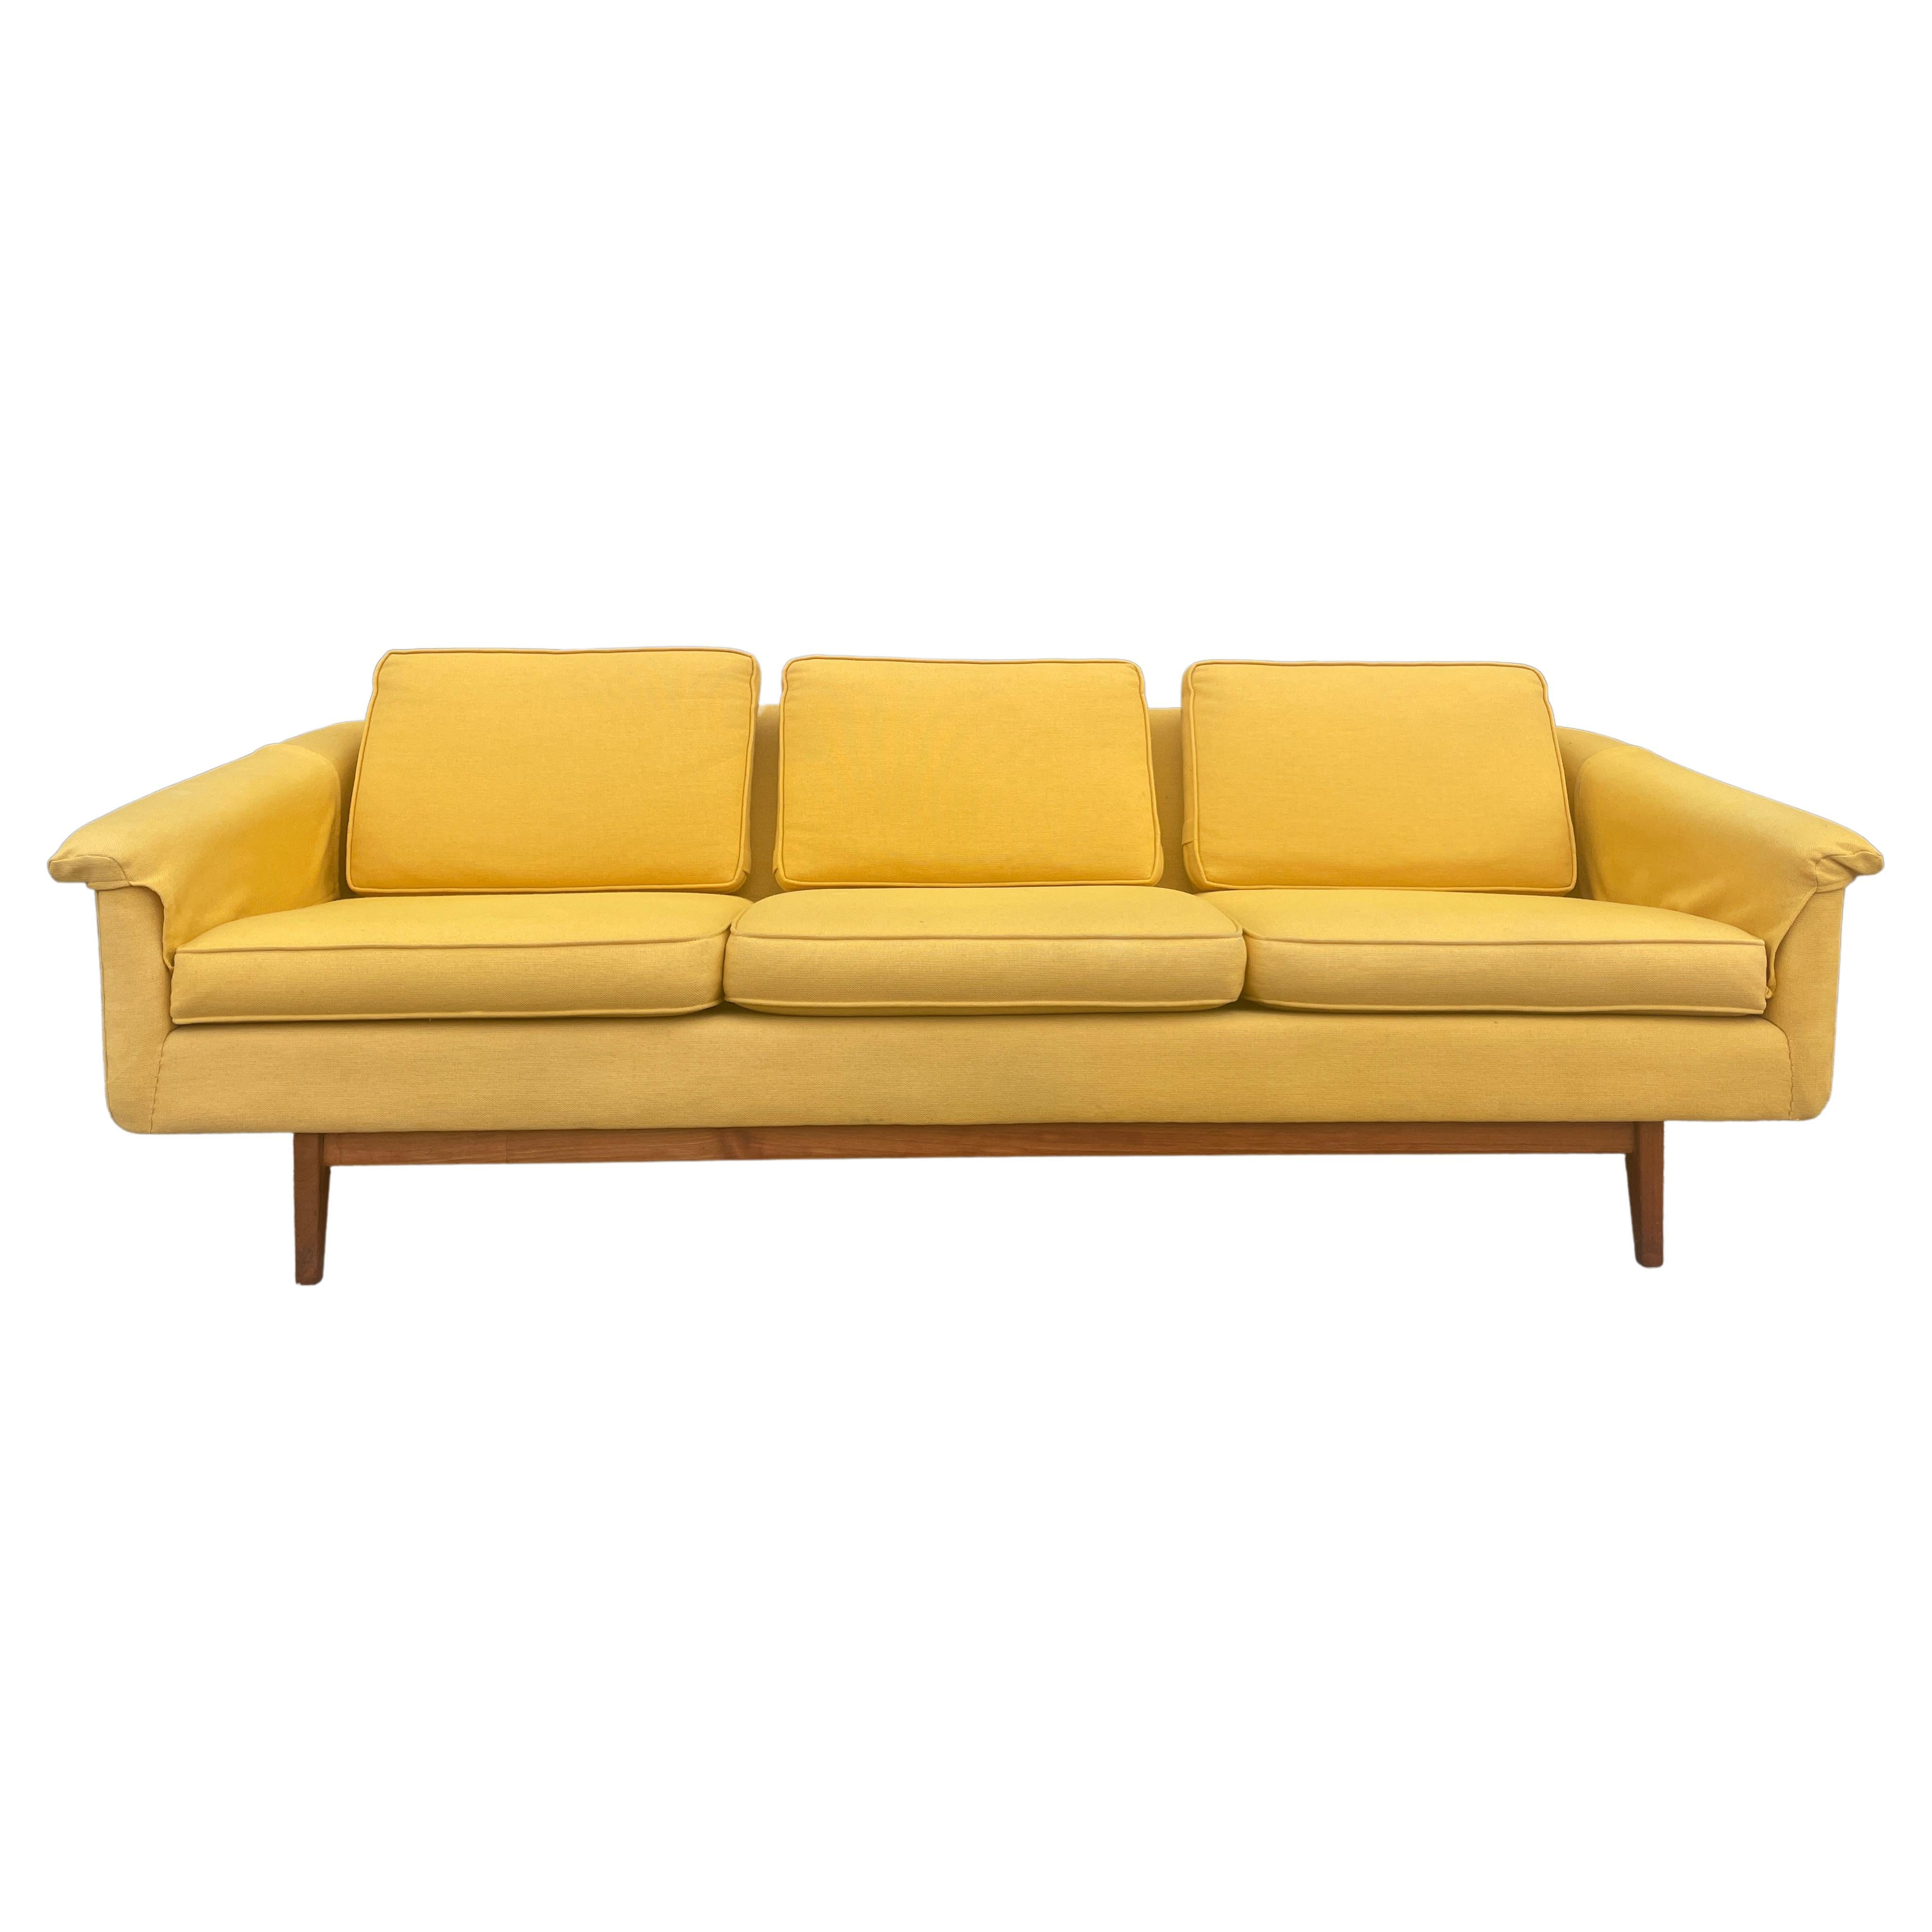 Mid-Century Modern Scandinavian 3 Seat Mustard Sofa Couch by DUX